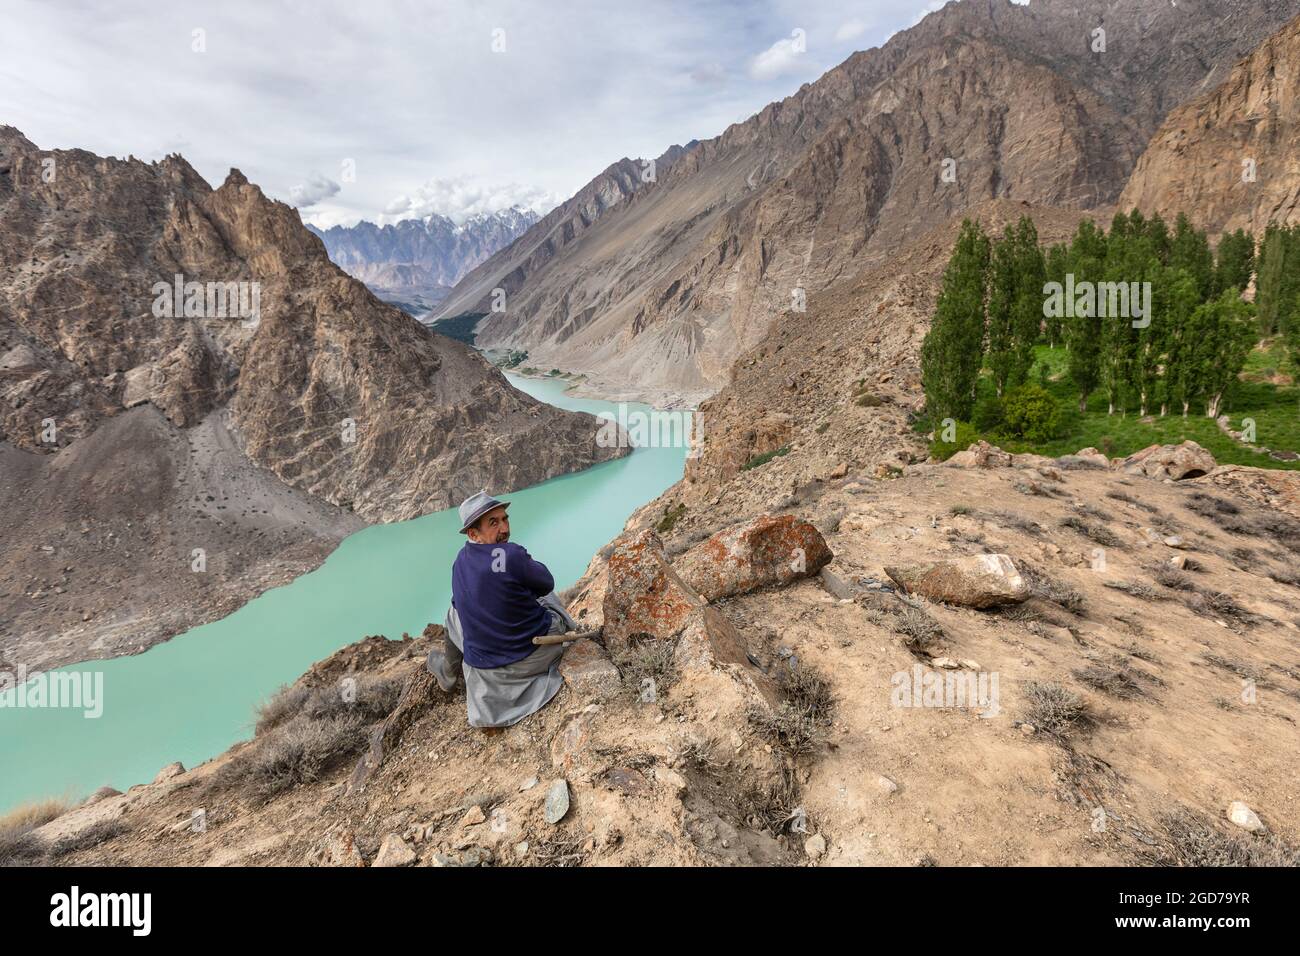 Hunza valley, Pakistan - June 2021:Man near turquoise mountain lake rocky shore Stock Photo